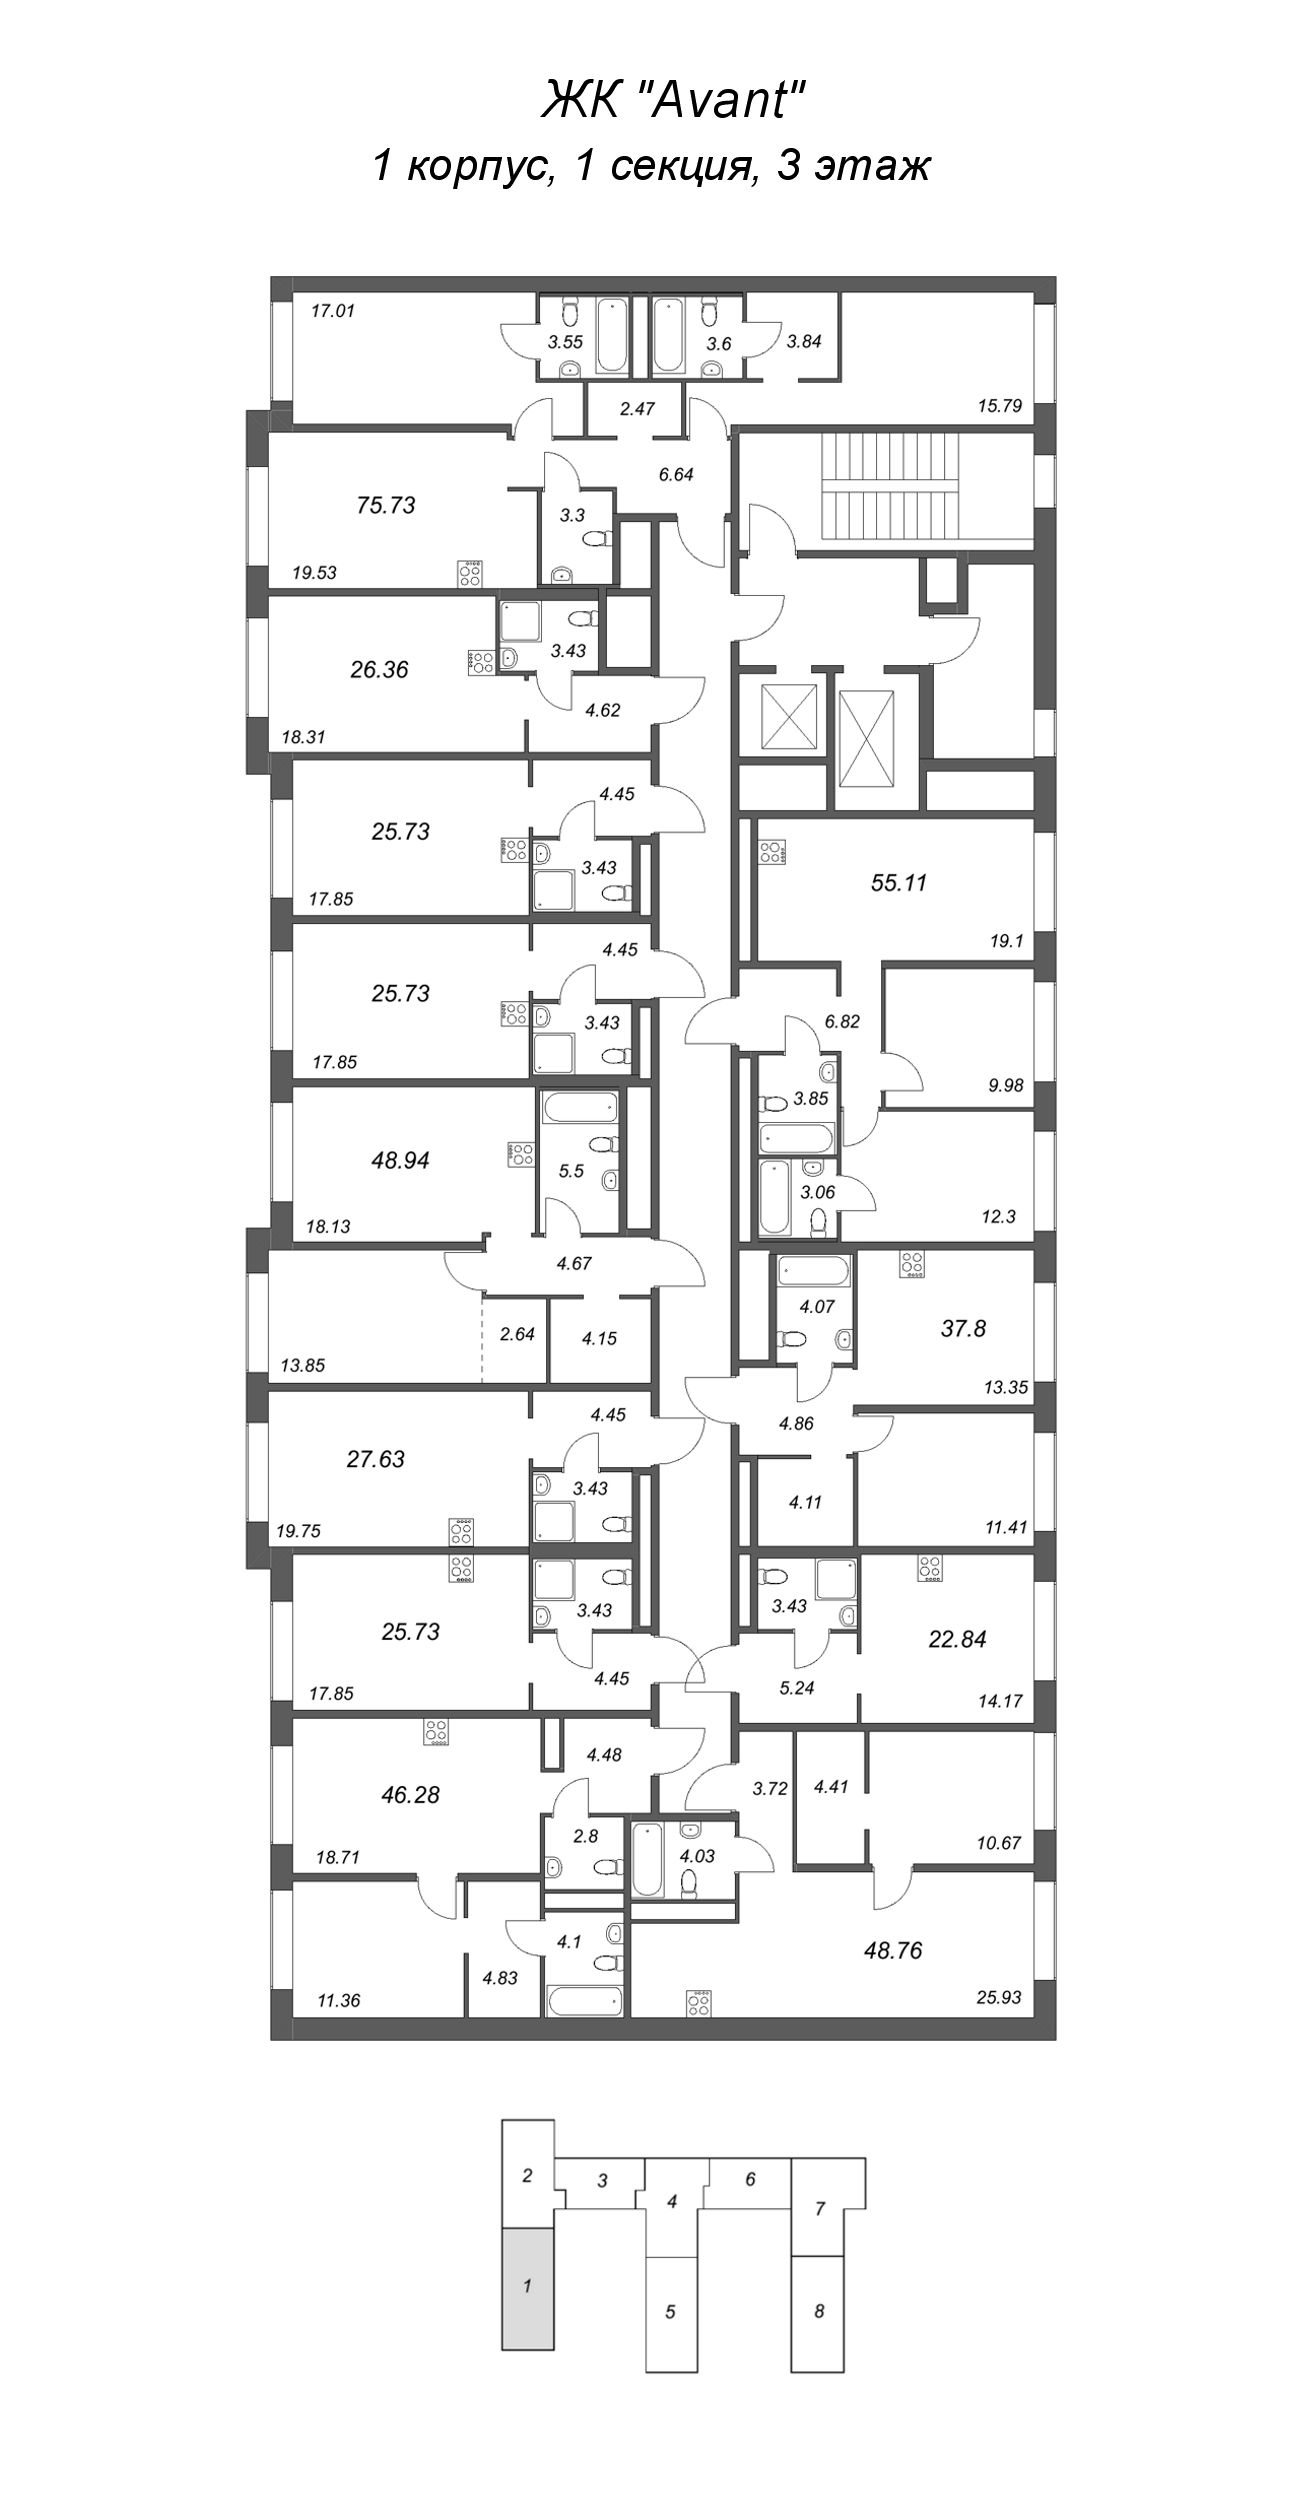 3-комнатная (Евро) квартира, 55.11 м² в ЖК "Avant" - планировка этажа